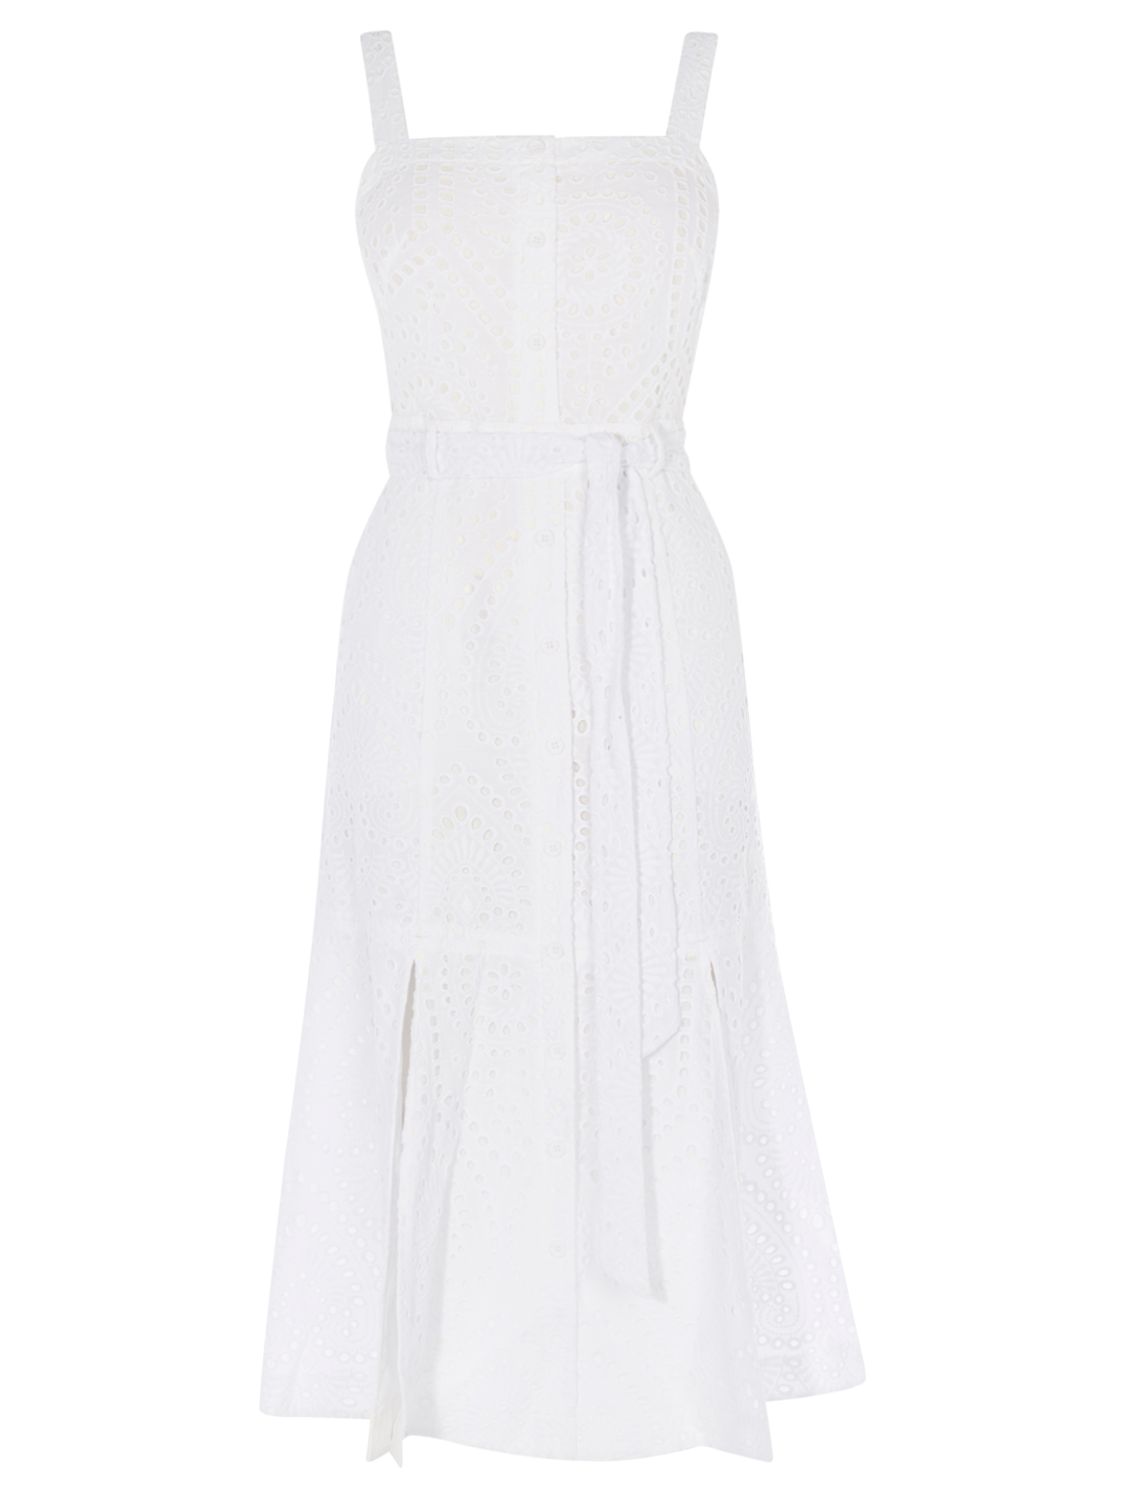 Karen Millen Broderie Midi Dress, White at John Lewis & Partners